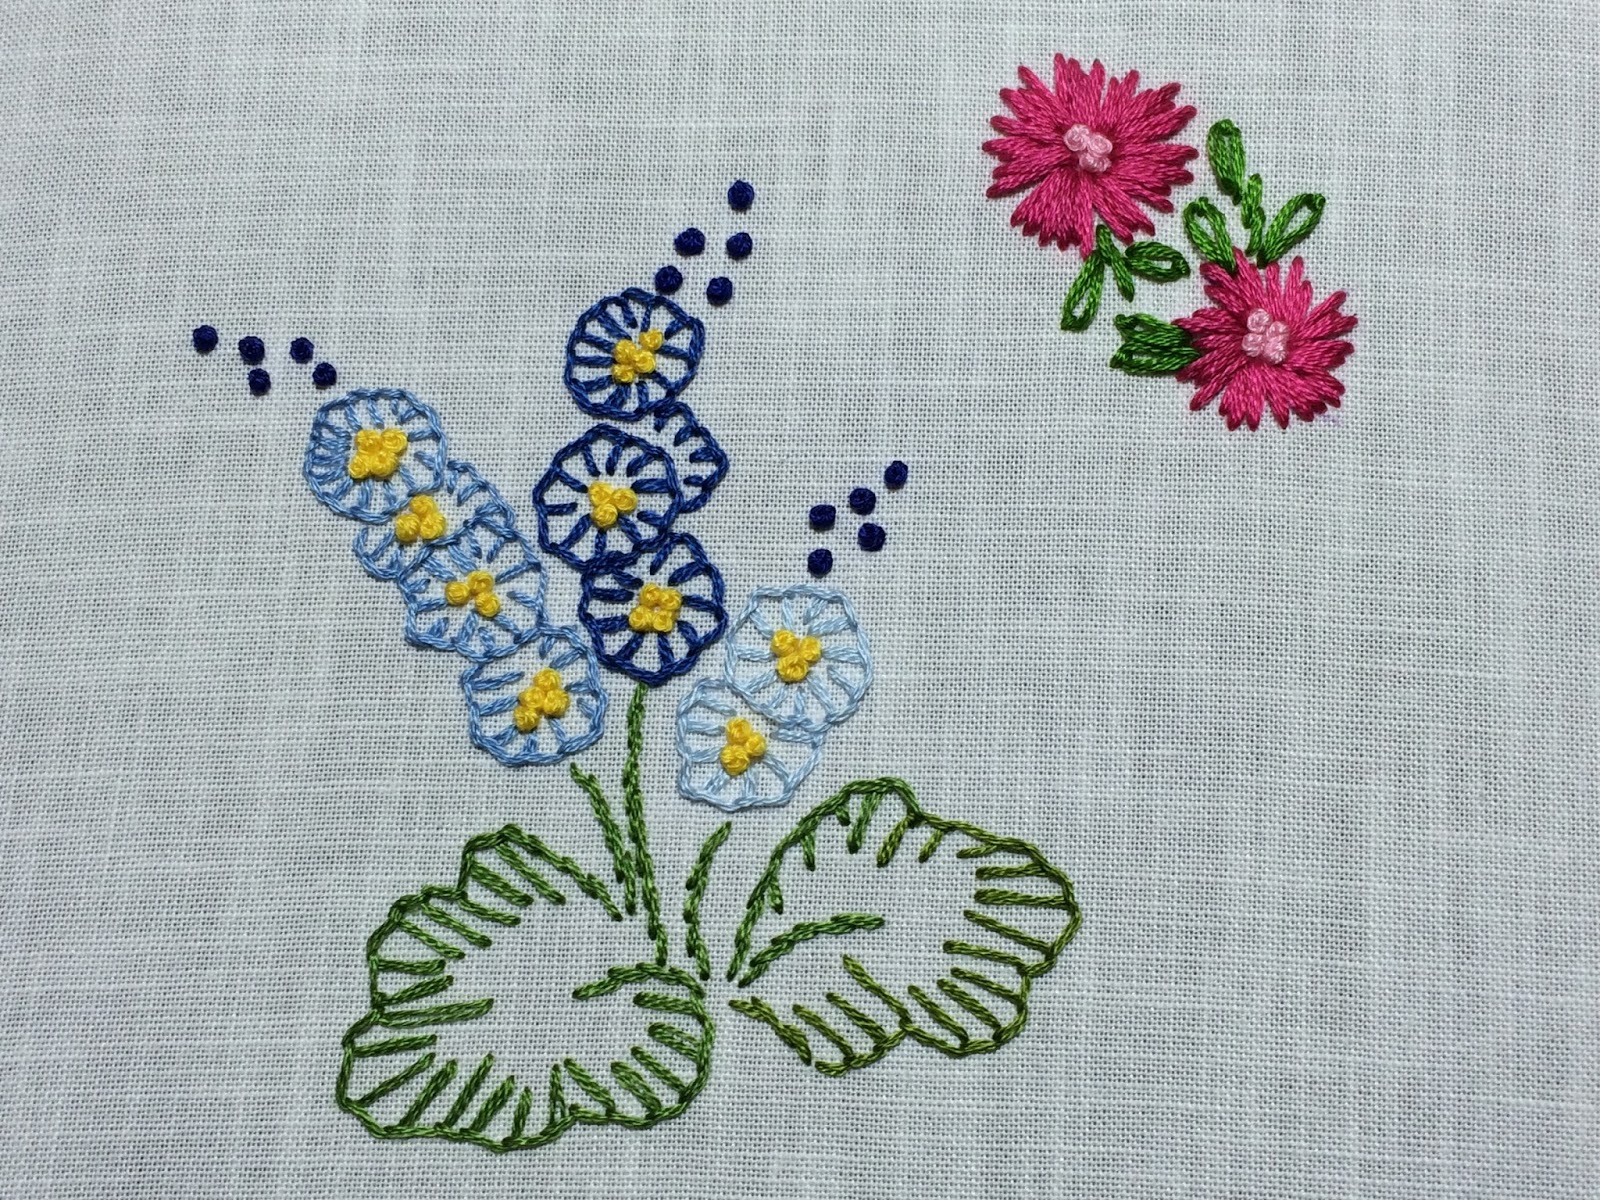 blanket stitch flowers